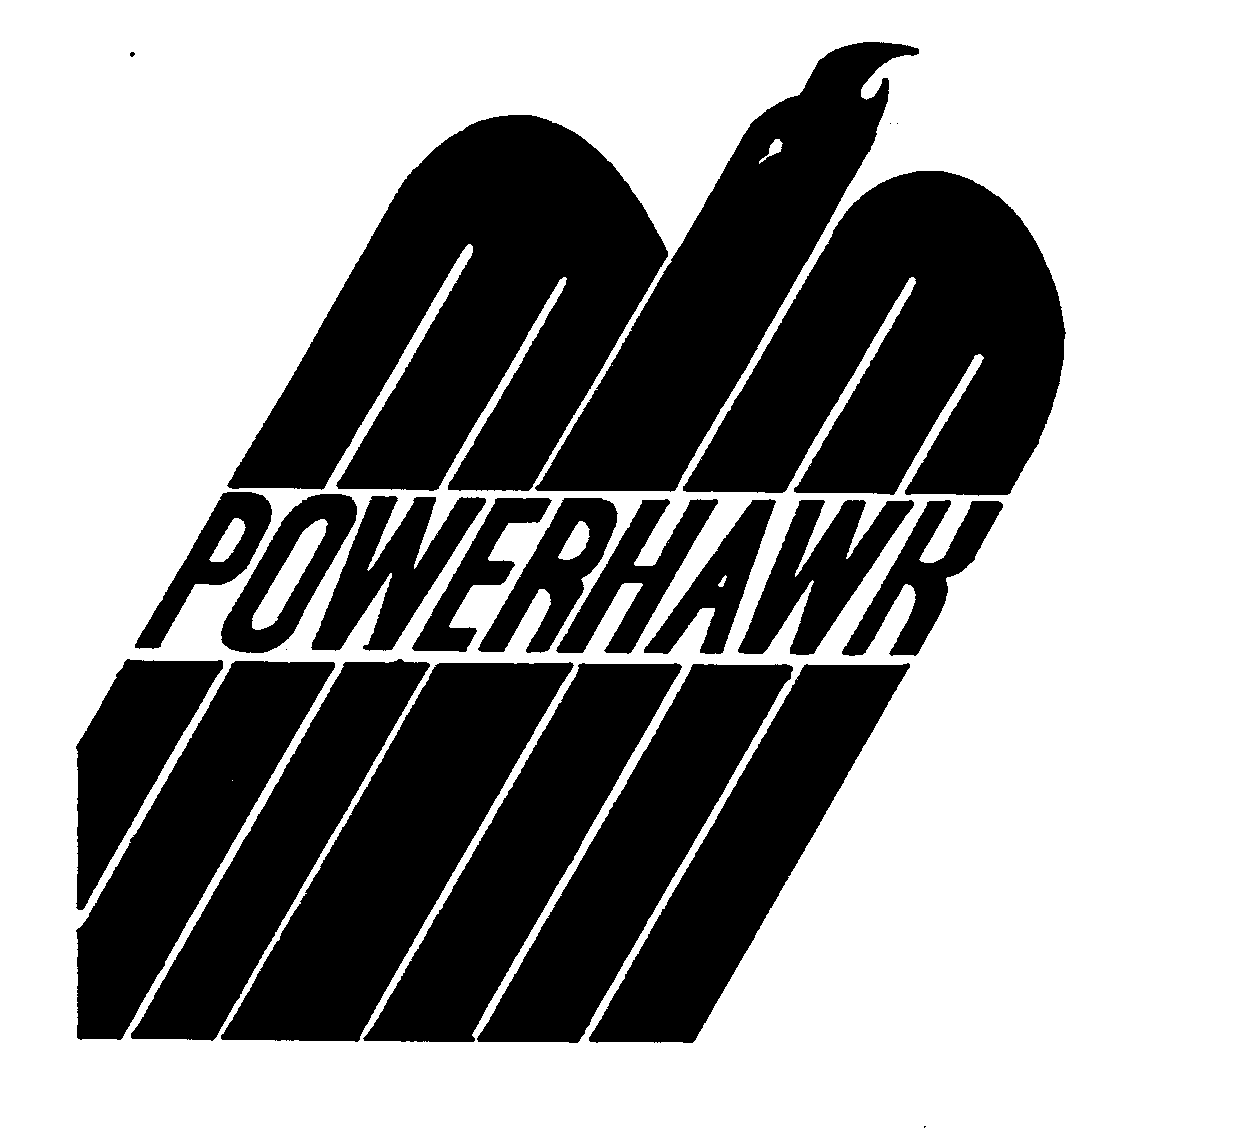  POWERHAWK